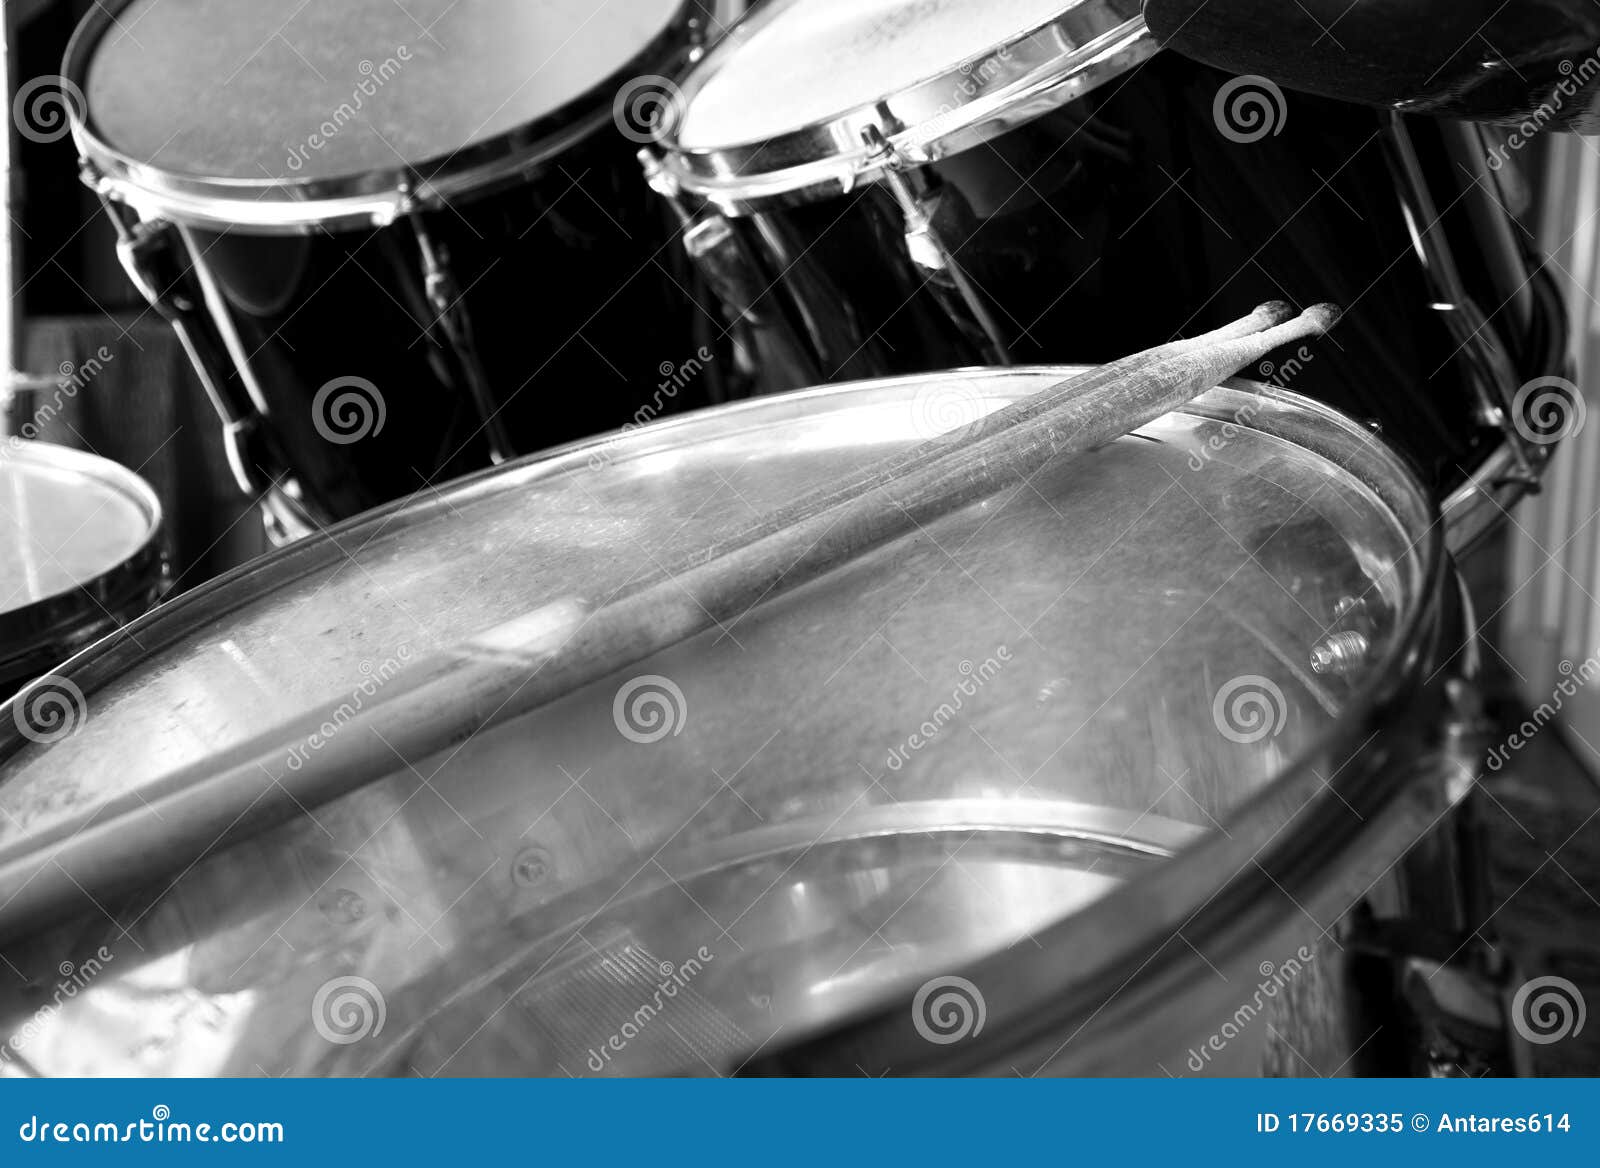 drum set and sticks